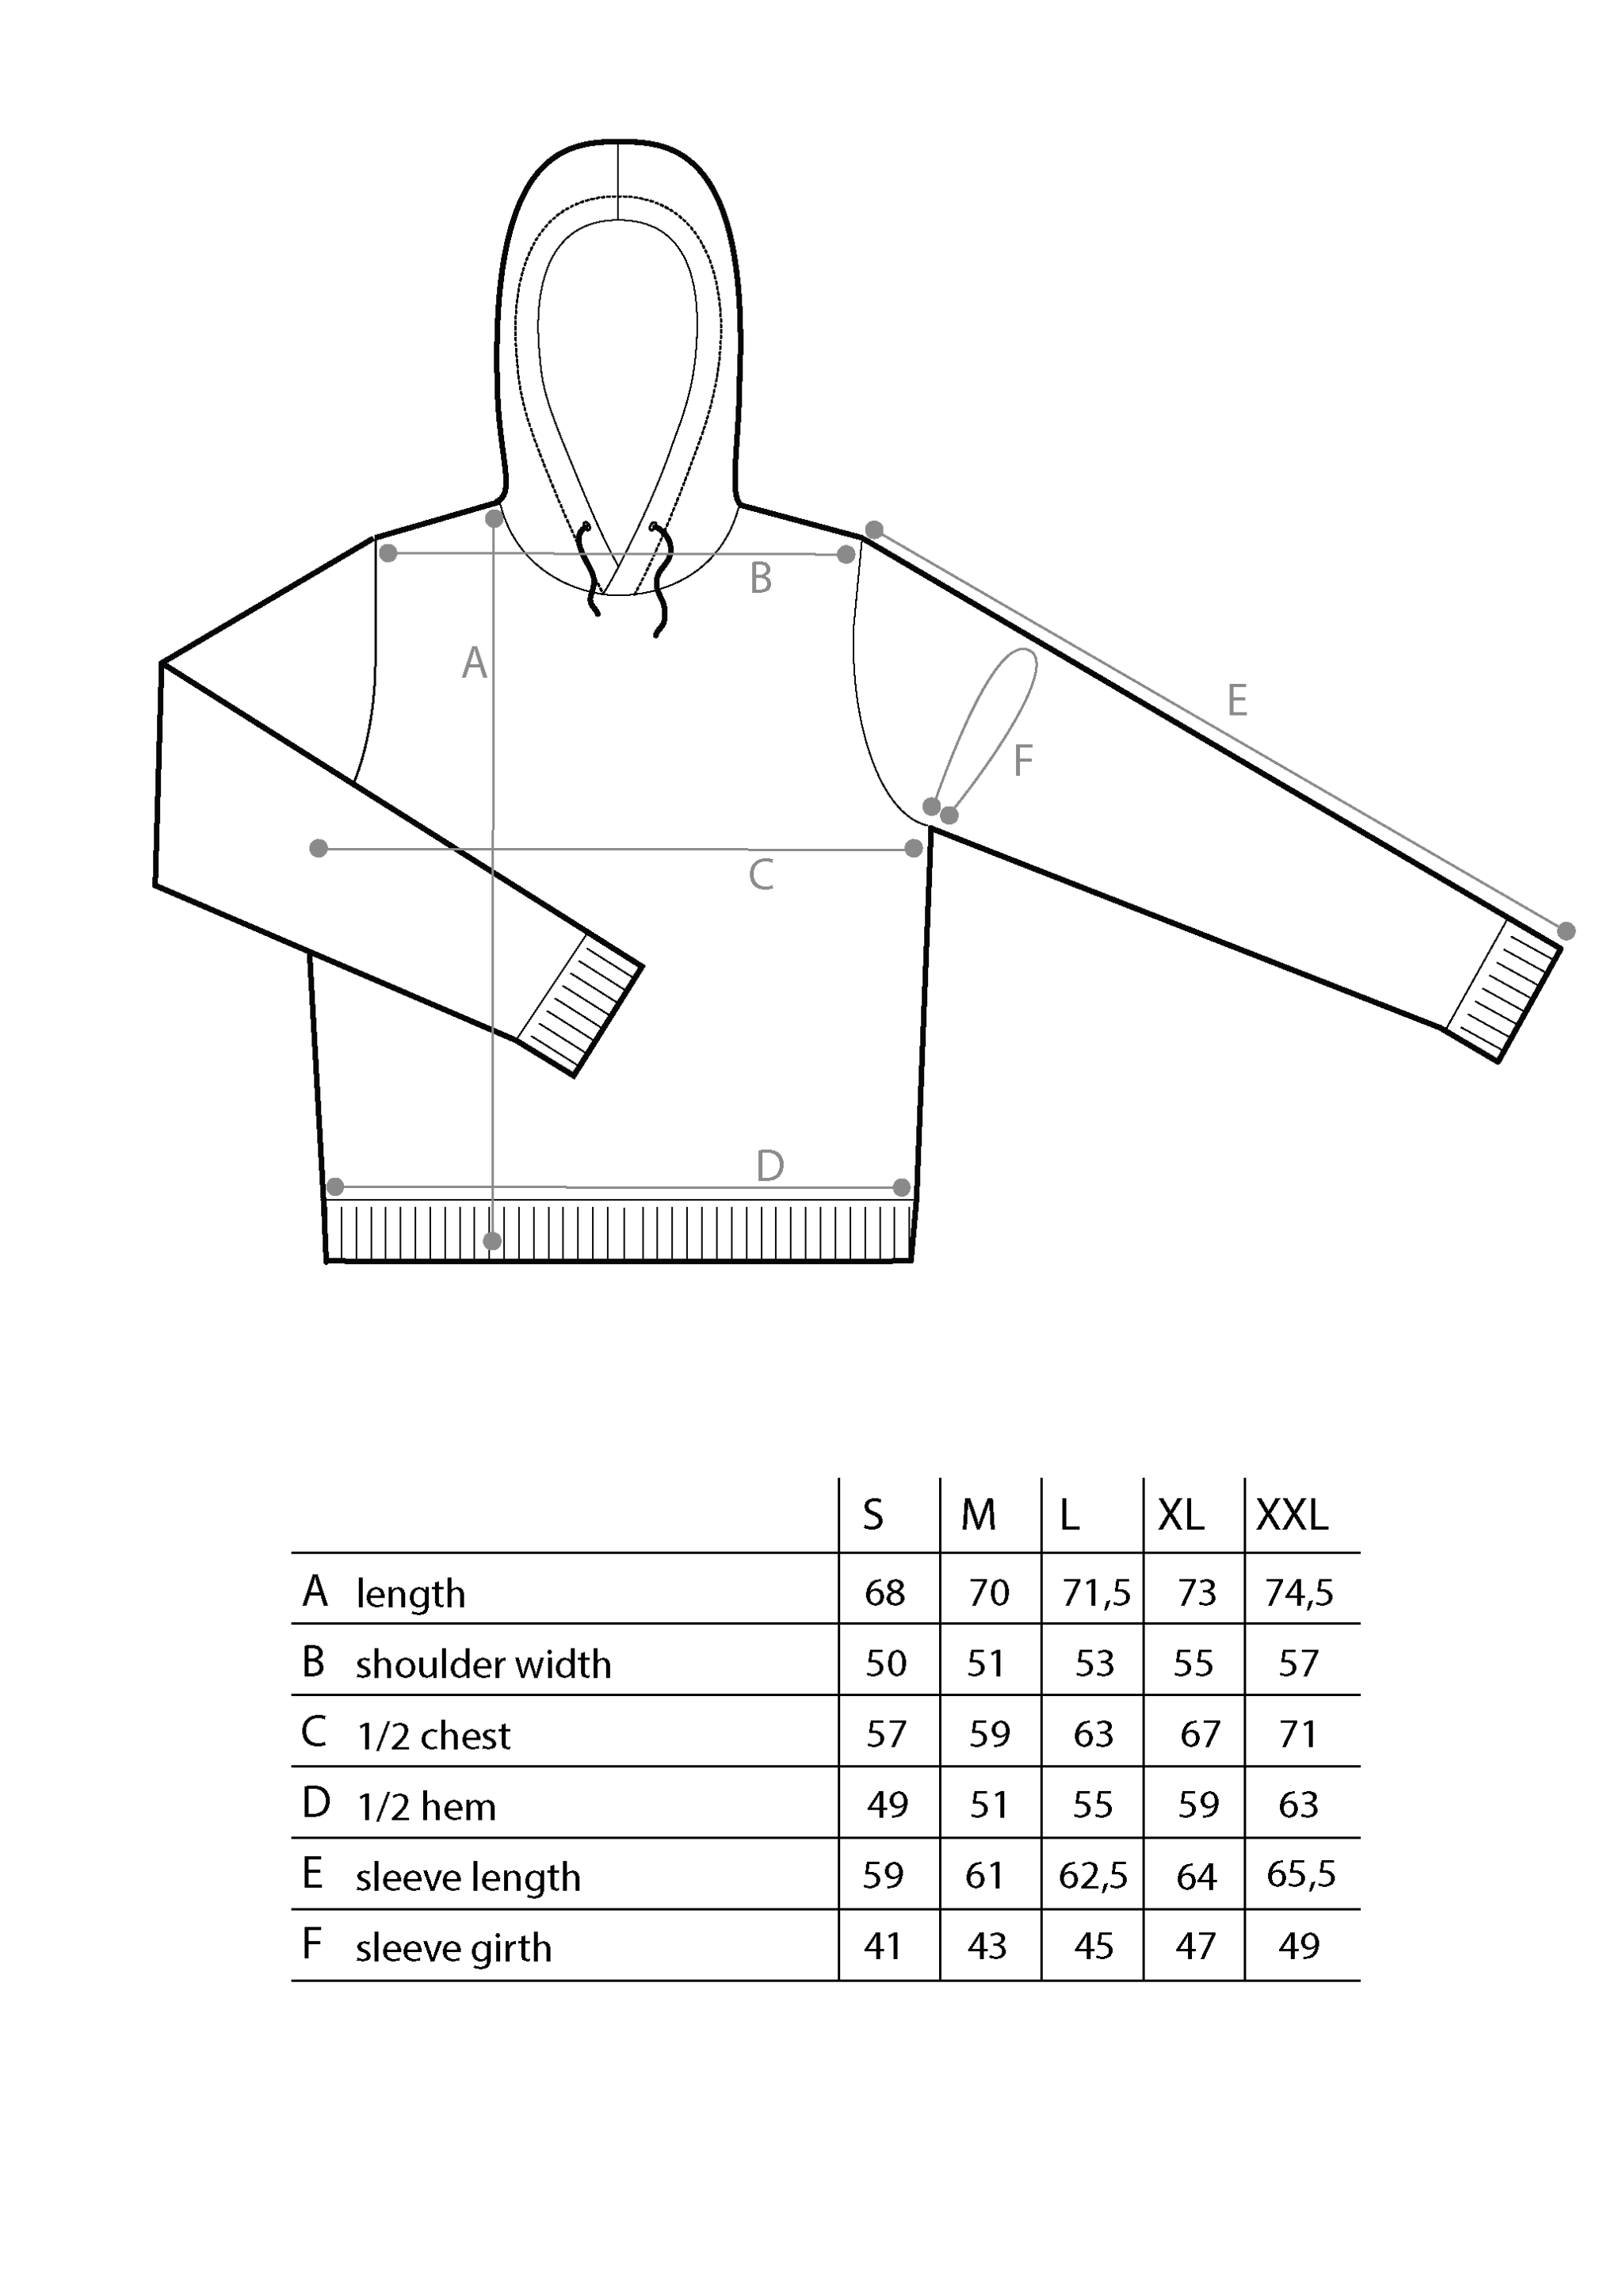 Roll Neck measurements